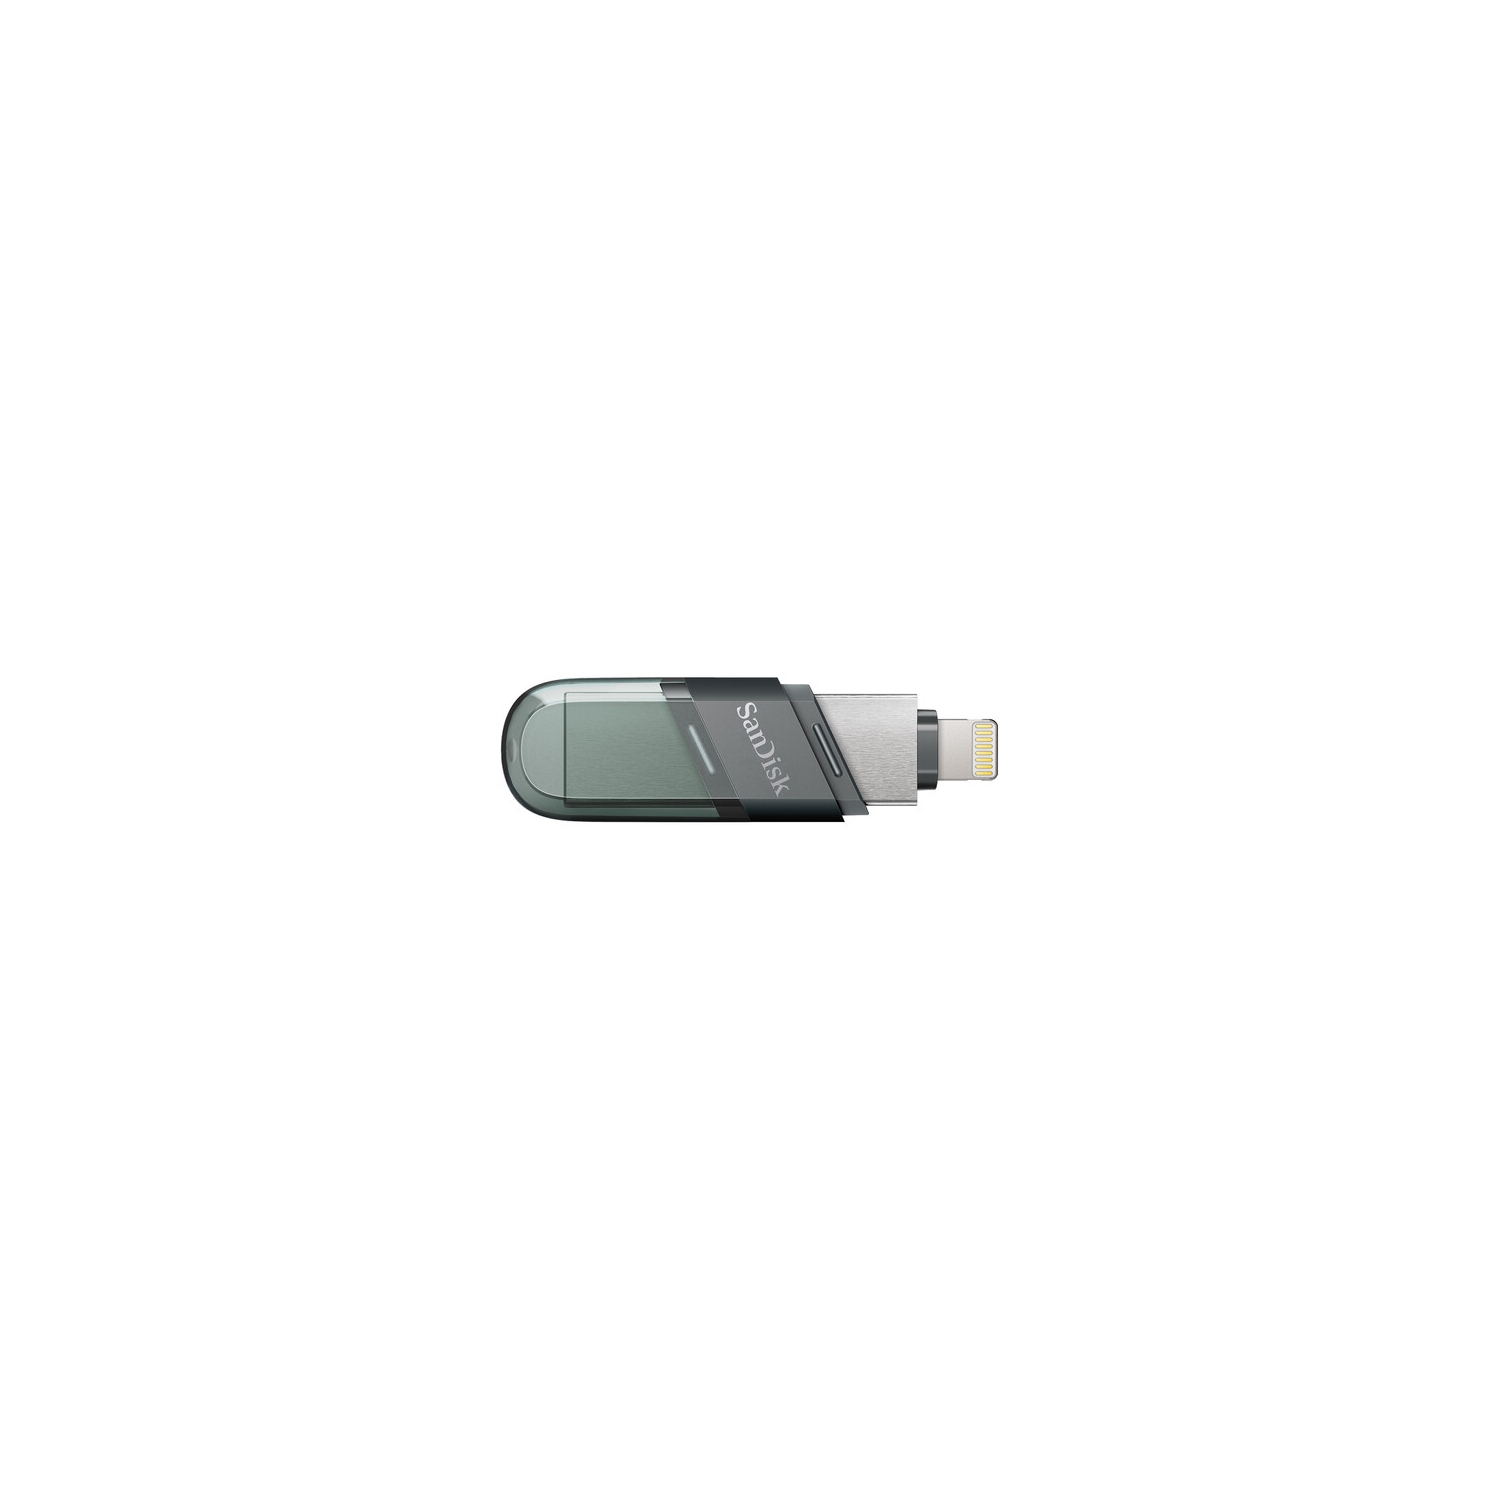 Sandisk iXpand Flash Drive Flip (64GB, SDIX90N-064G-GN6NN, Black) - Brand New